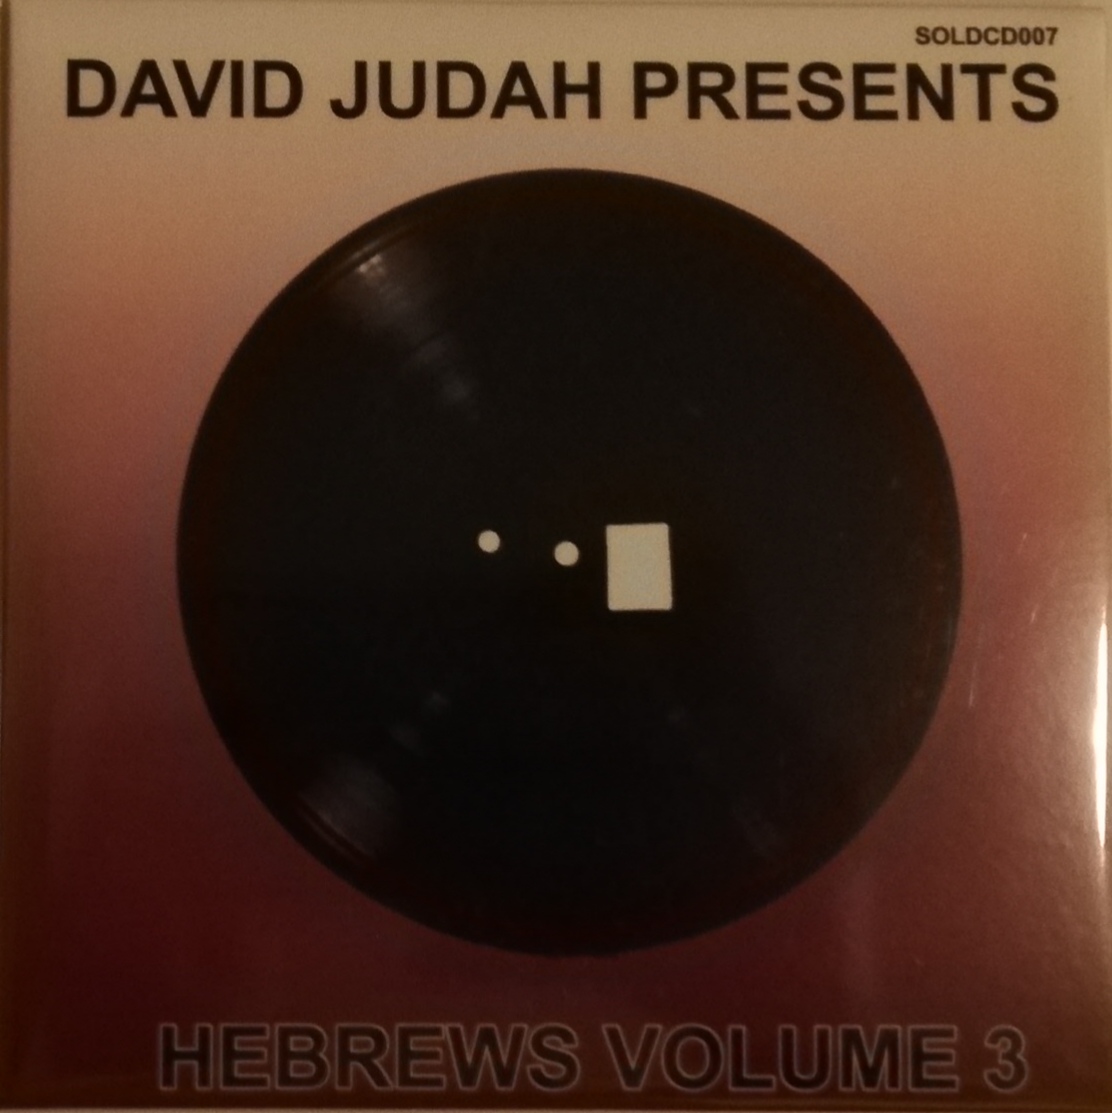 CD HEBREWS VOLUME 3